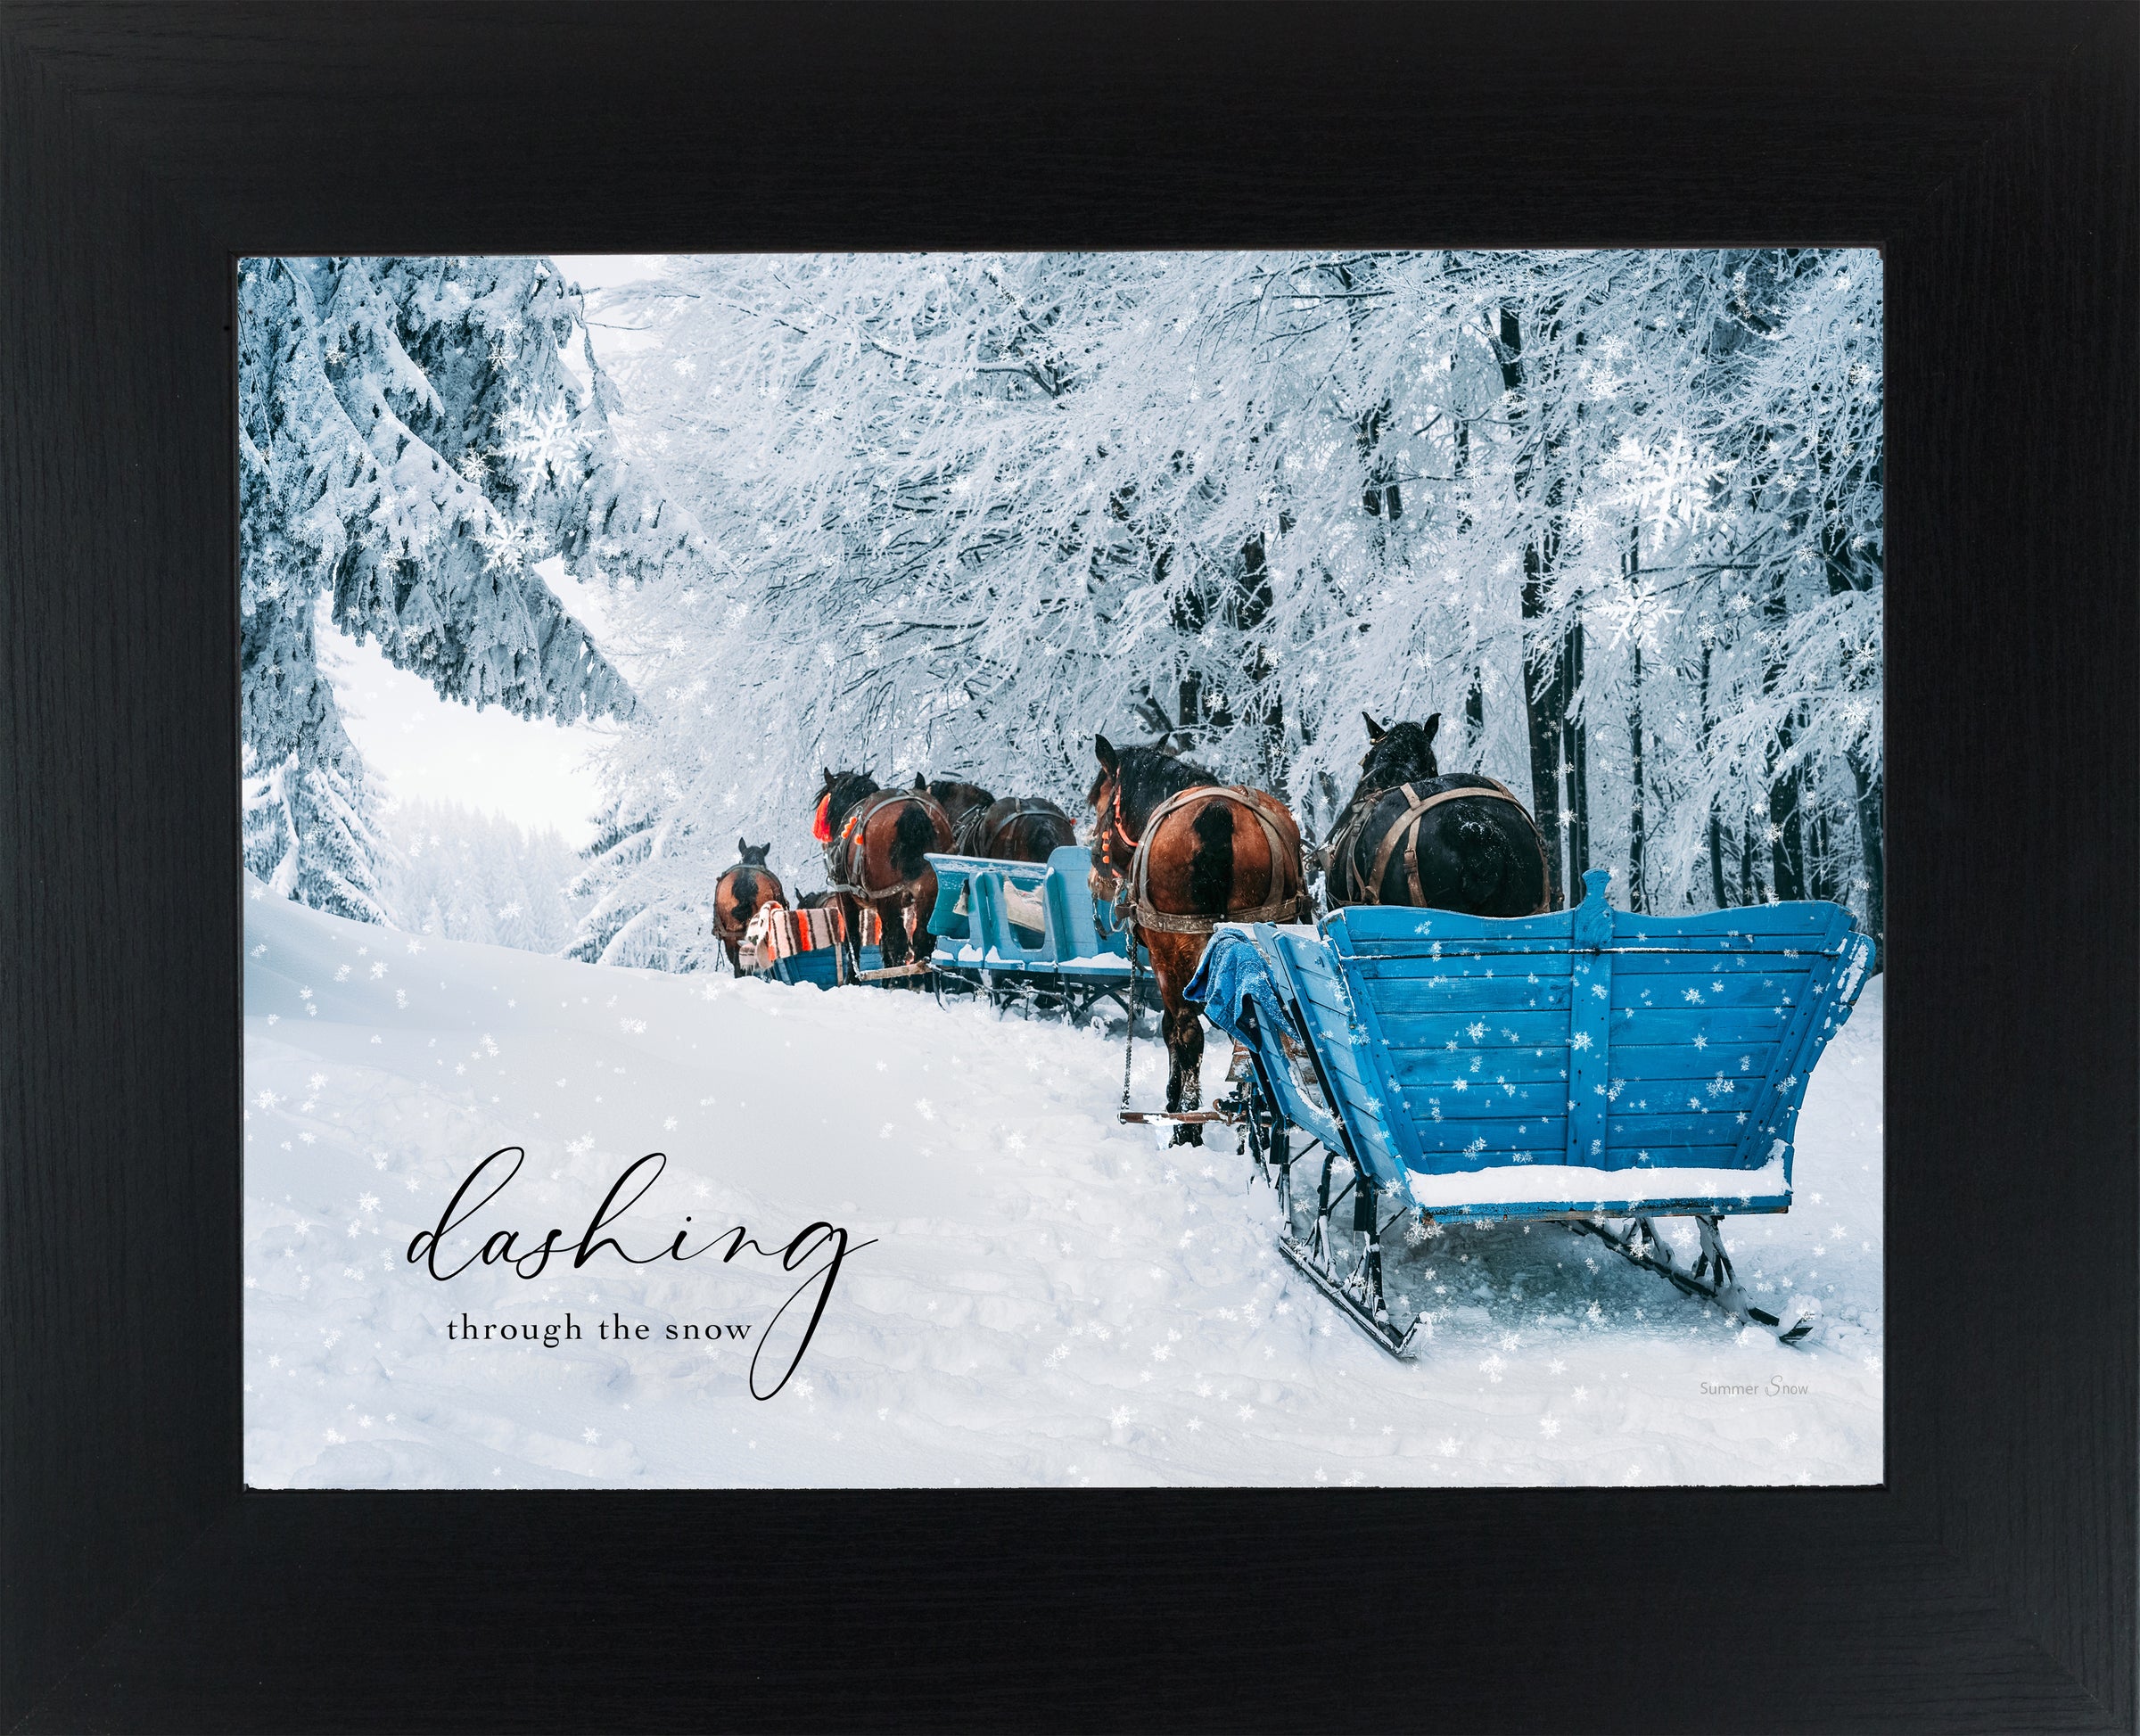 Dashing Through the Snow by Summer Snow SA427